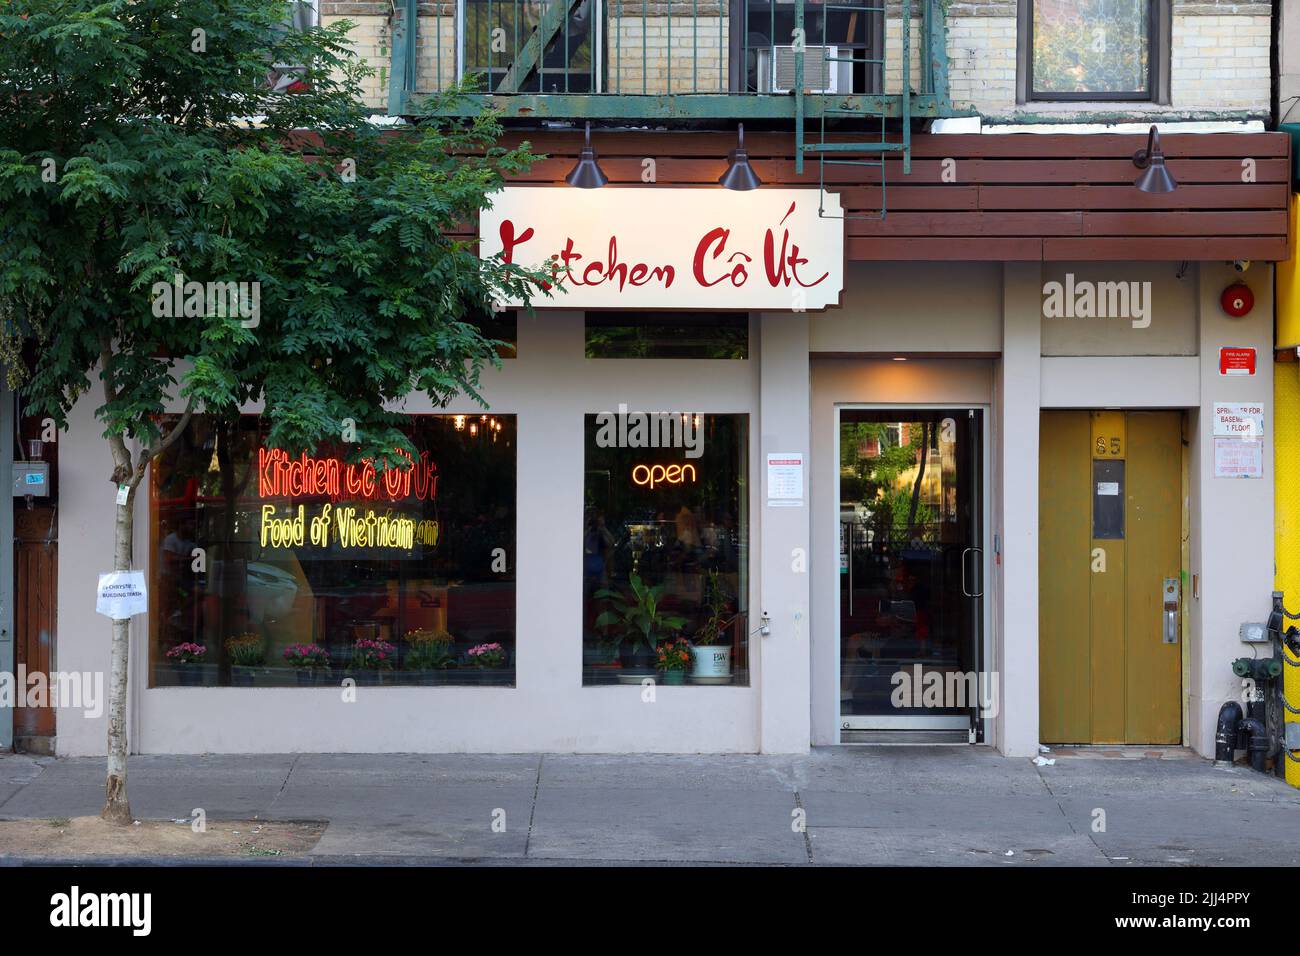 Kitchen Co Ut, 85 Chrystie St, New York, NYC storefront foto del ristorante vietnamita a Manhattan Chinatown. Cucina Cô út. Foto Stock